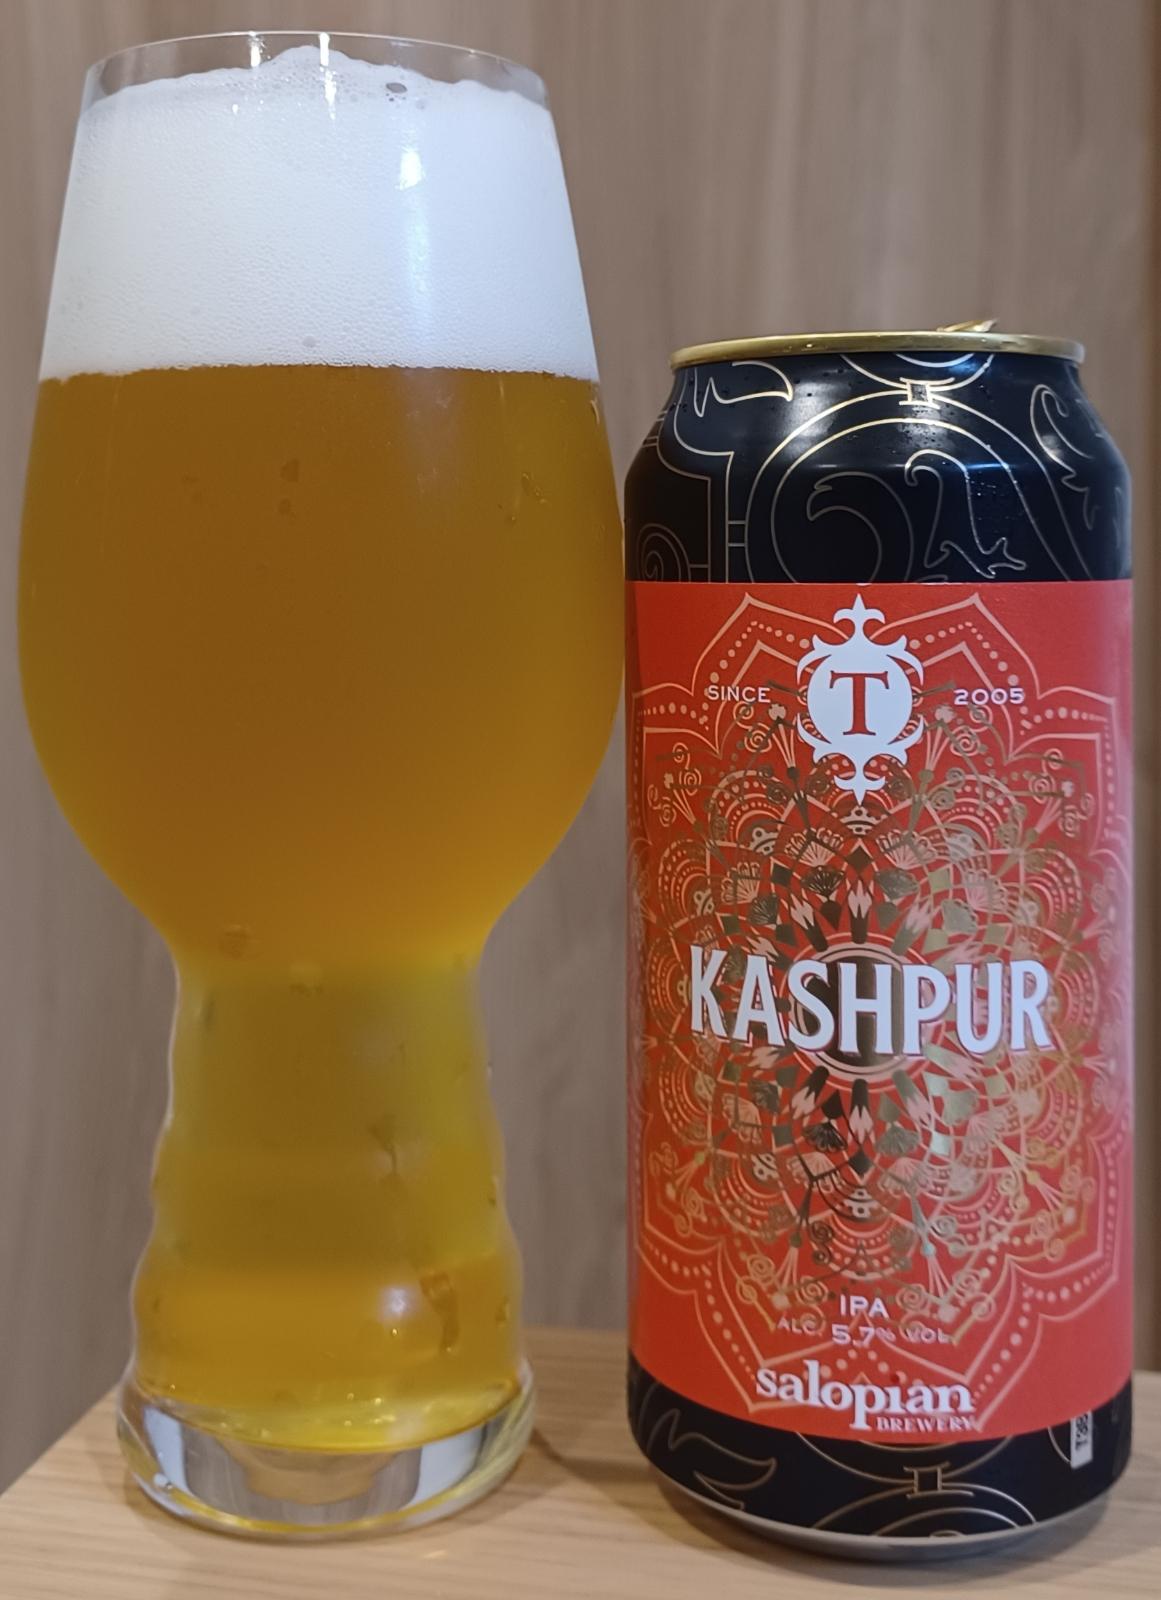 Kashpur (Collaboration with Salopian Brewery)